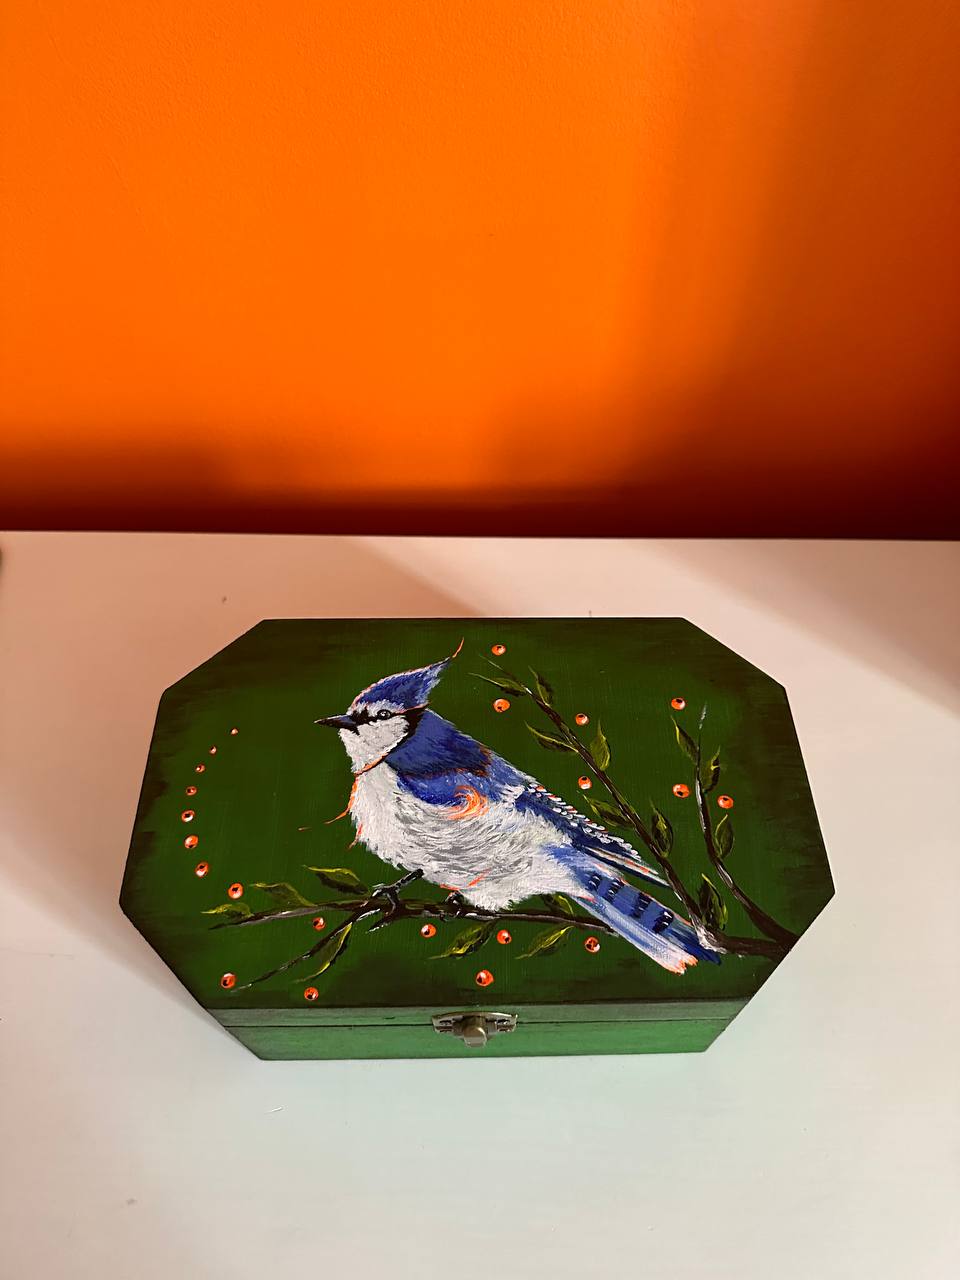 Blue Jay on the box